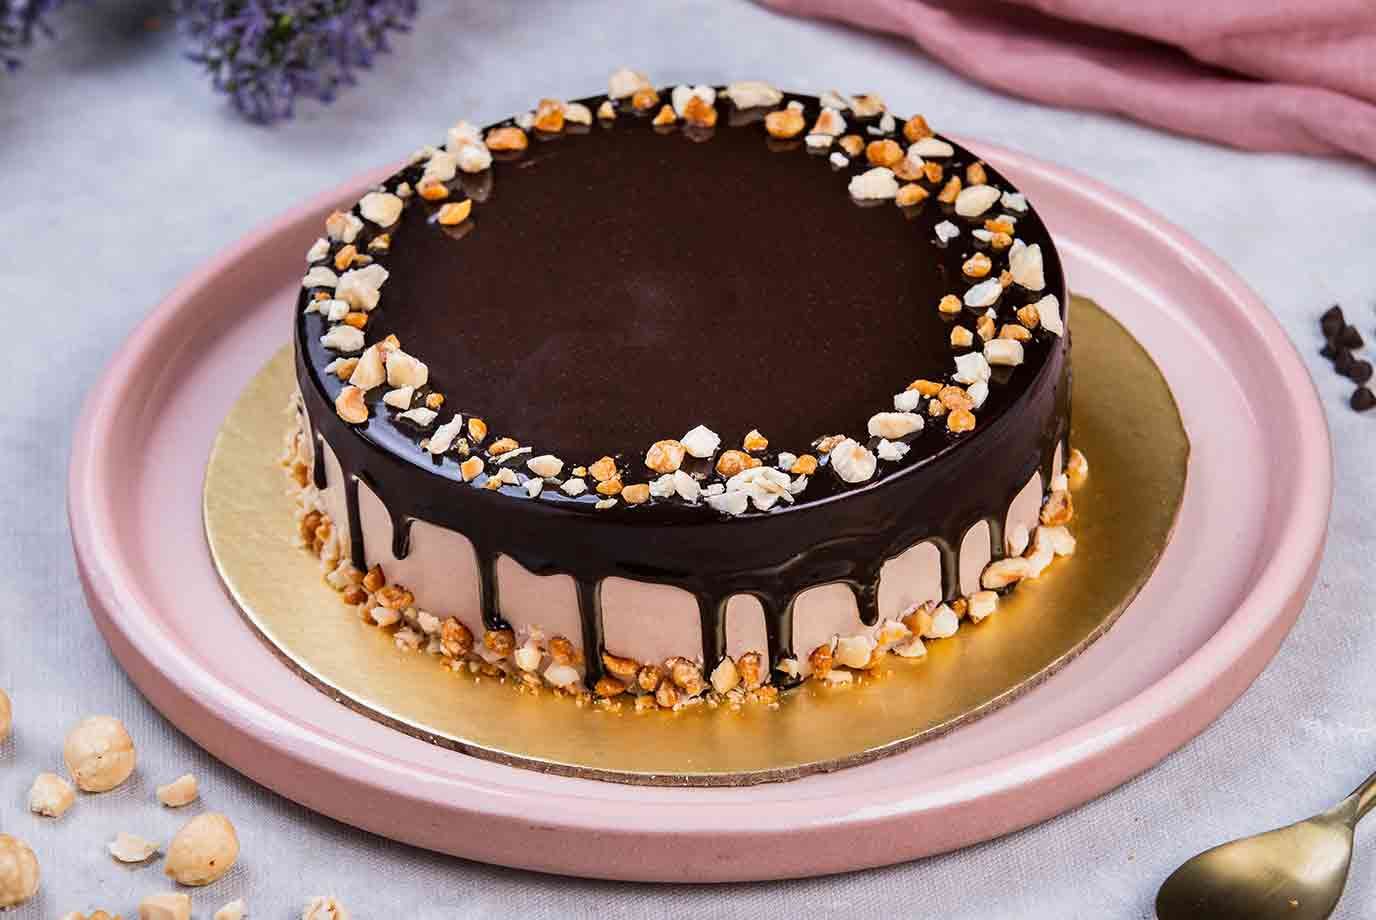 Chocolate Rose Designer Cake Half Kgs